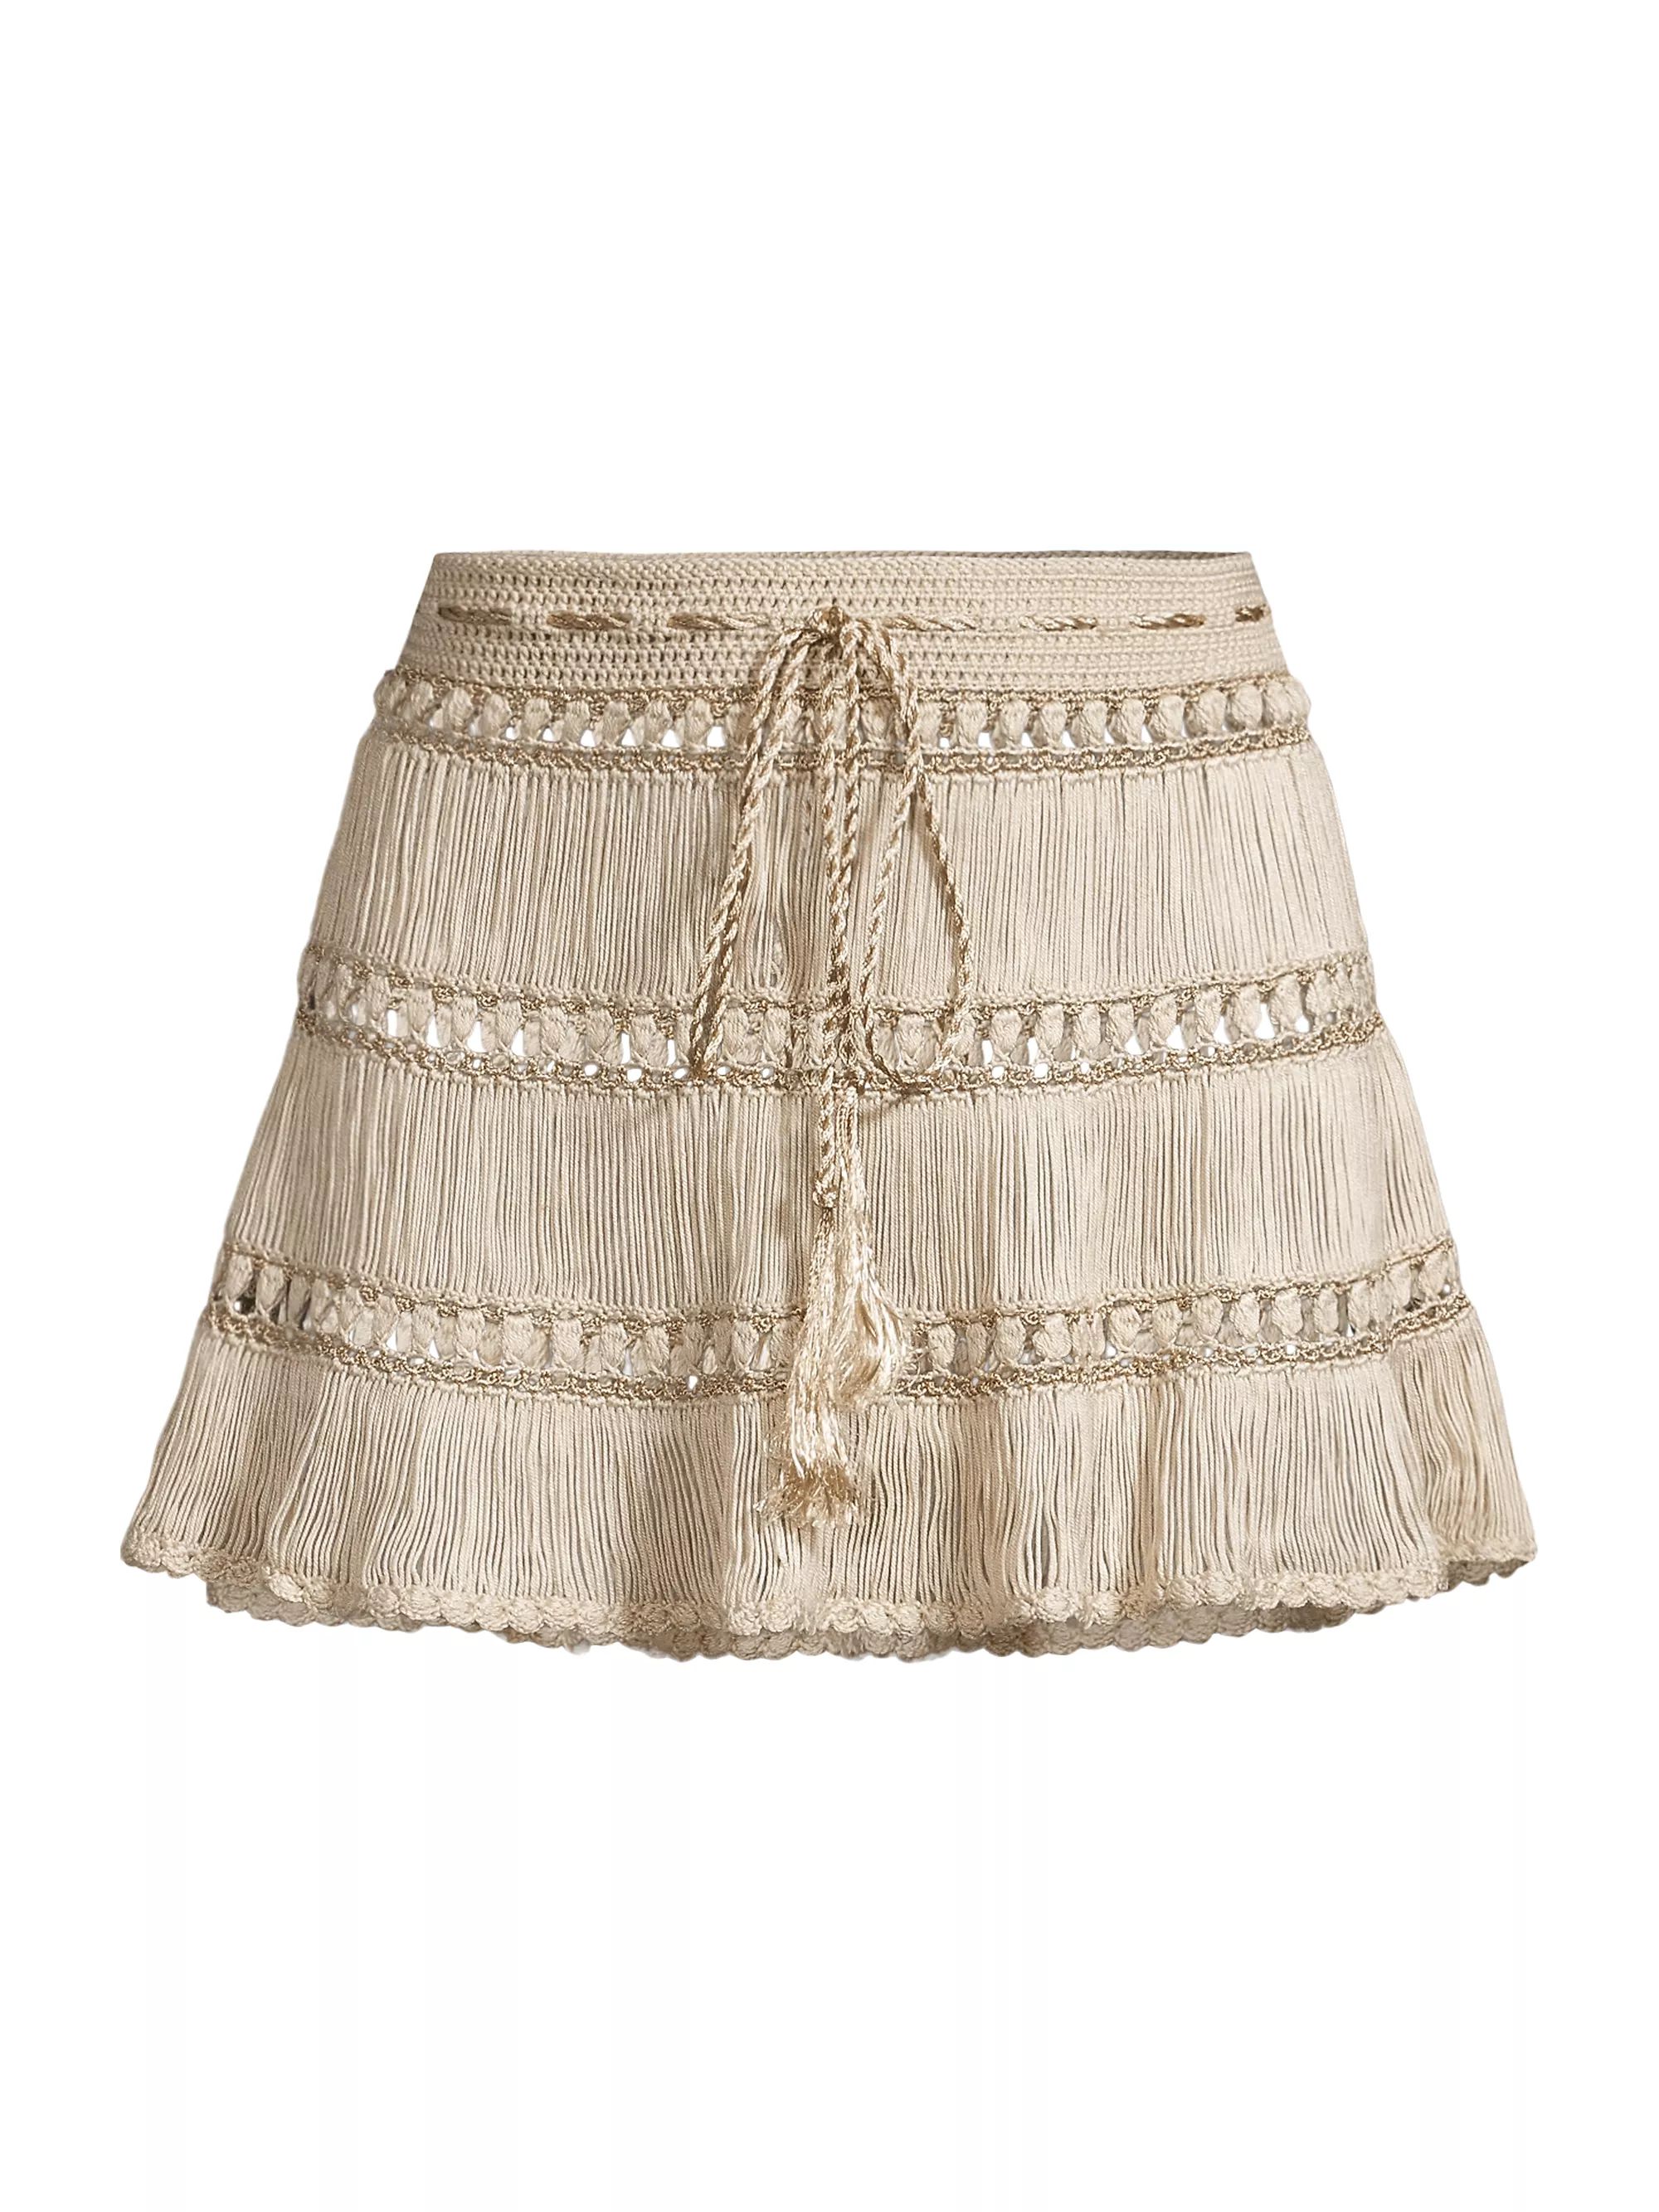 Shop My Beachy Side Hand Crochet Striped Cover-Up Miniskirt | Saks Fifth Avenue | Saks Fifth Avenue